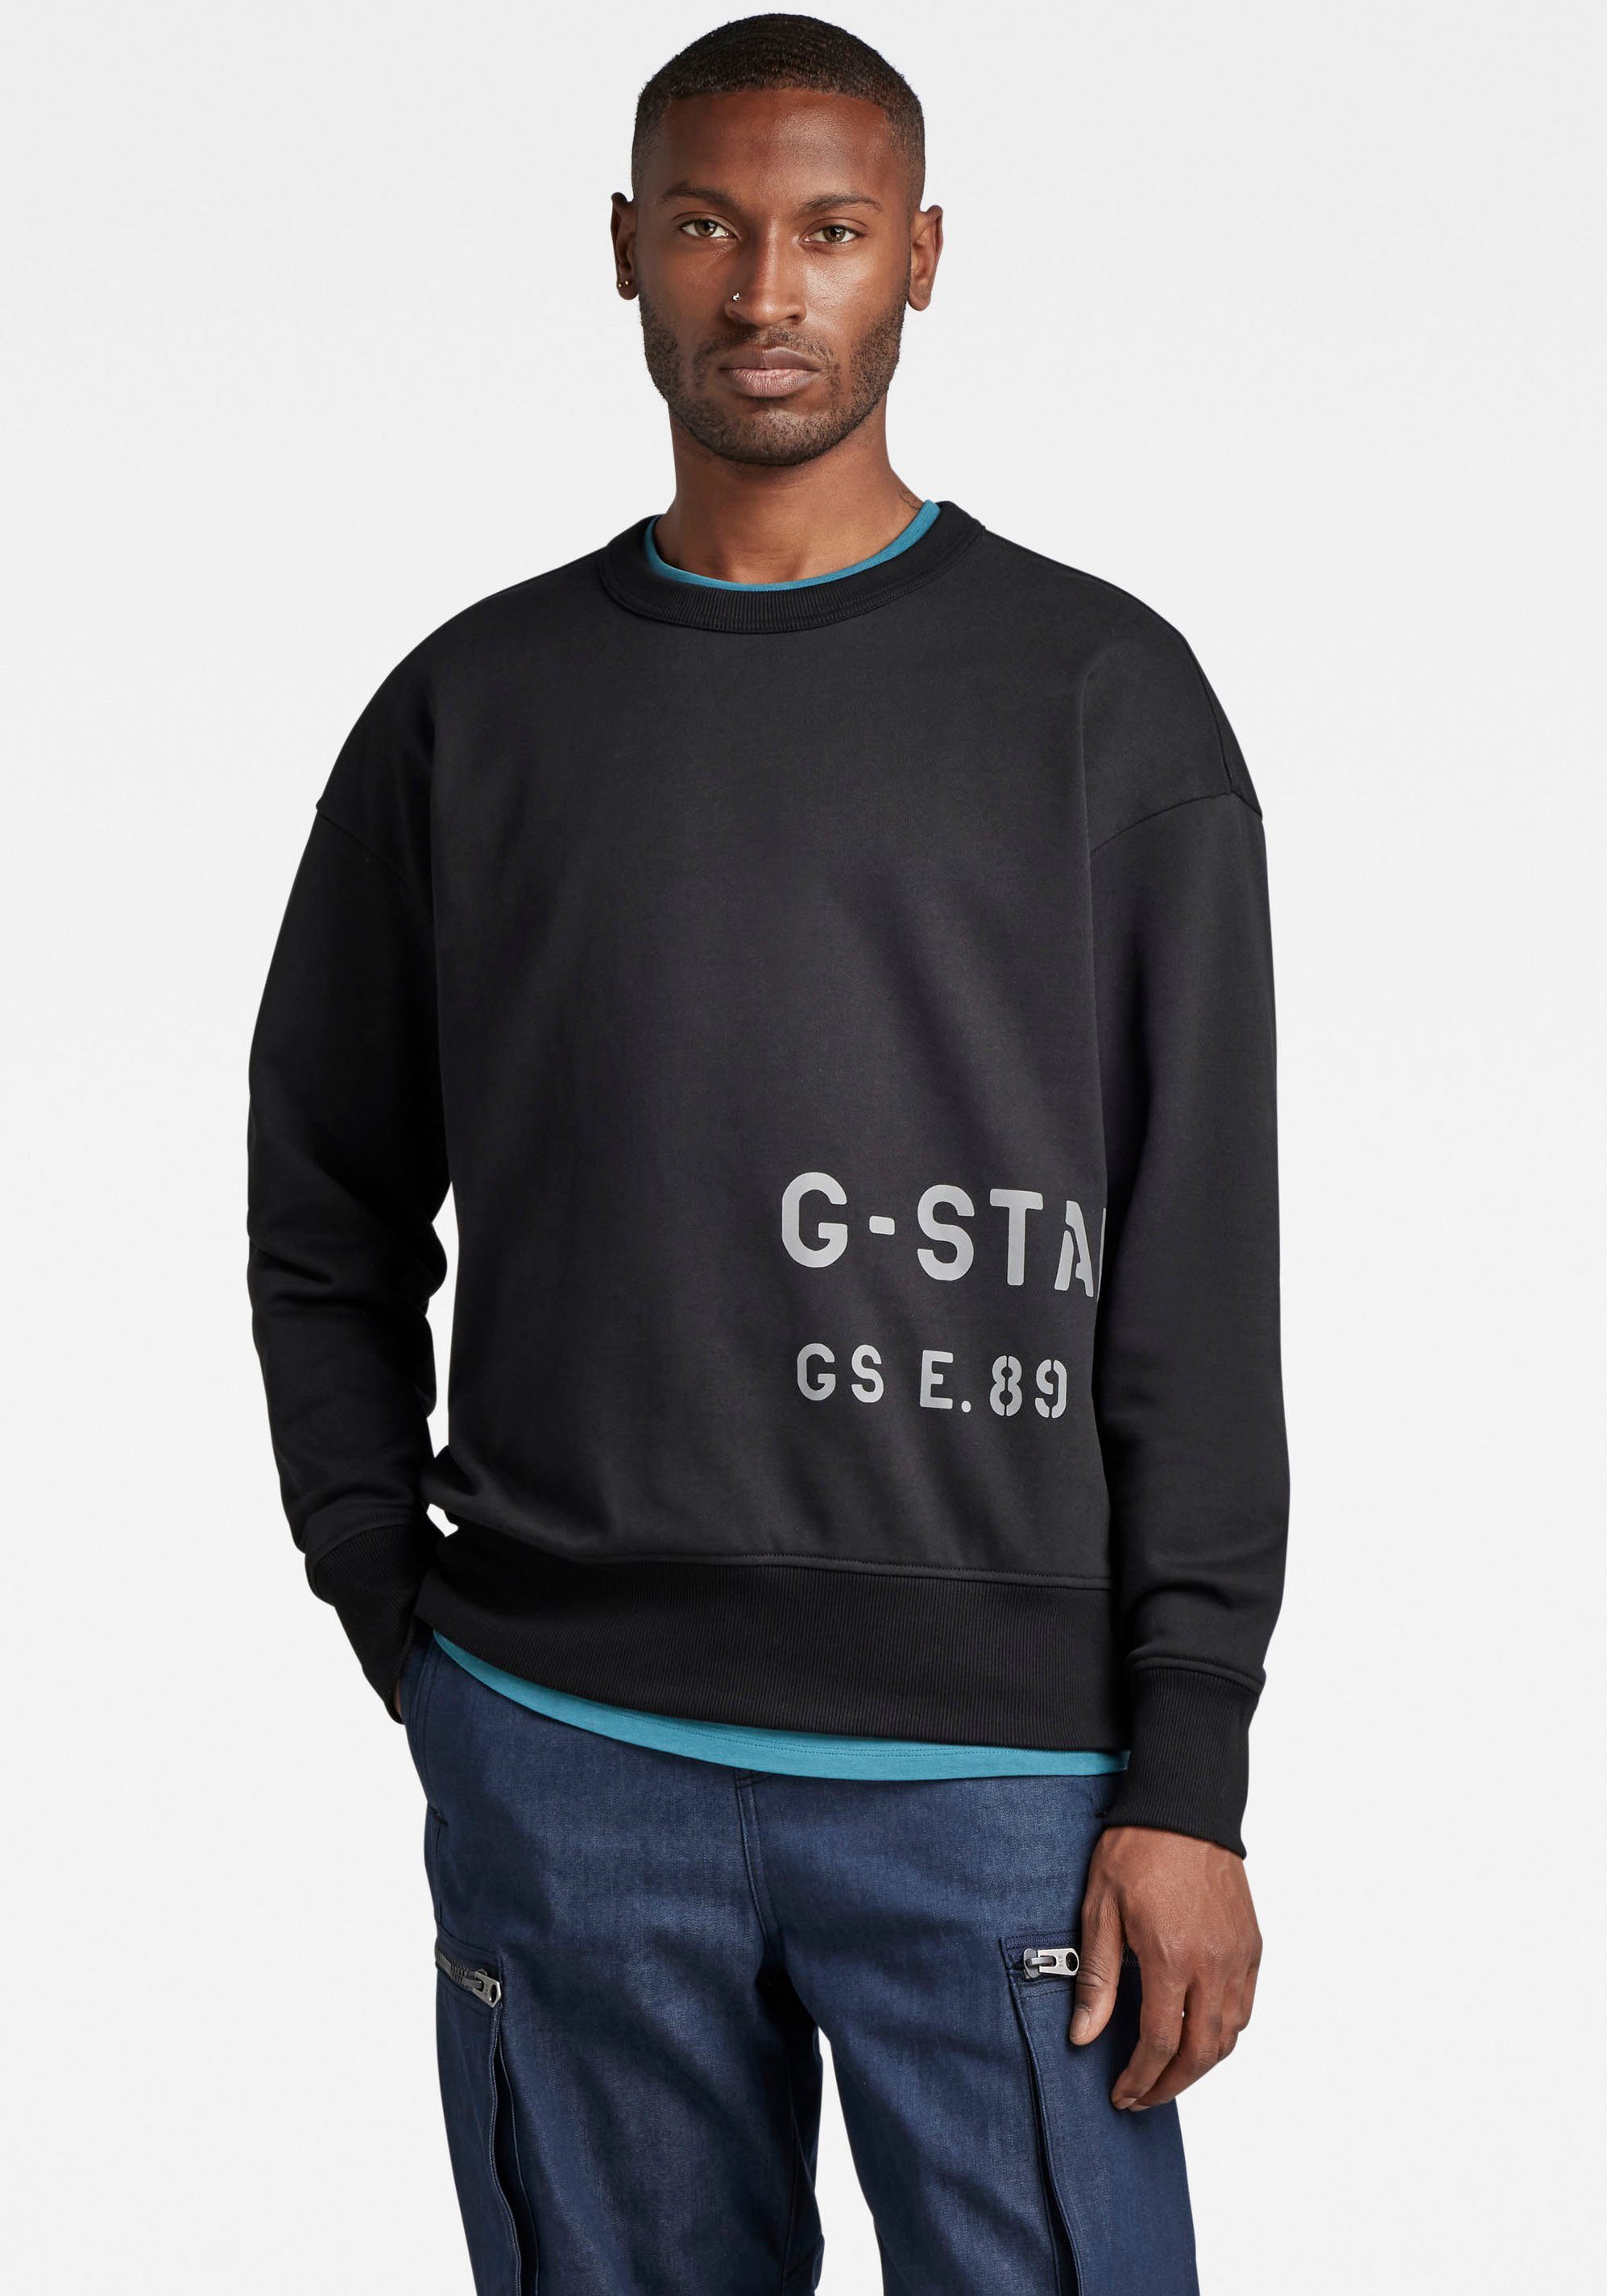 G-Star Sweatshirt Multigraphic oversize RAW Sweatshirt